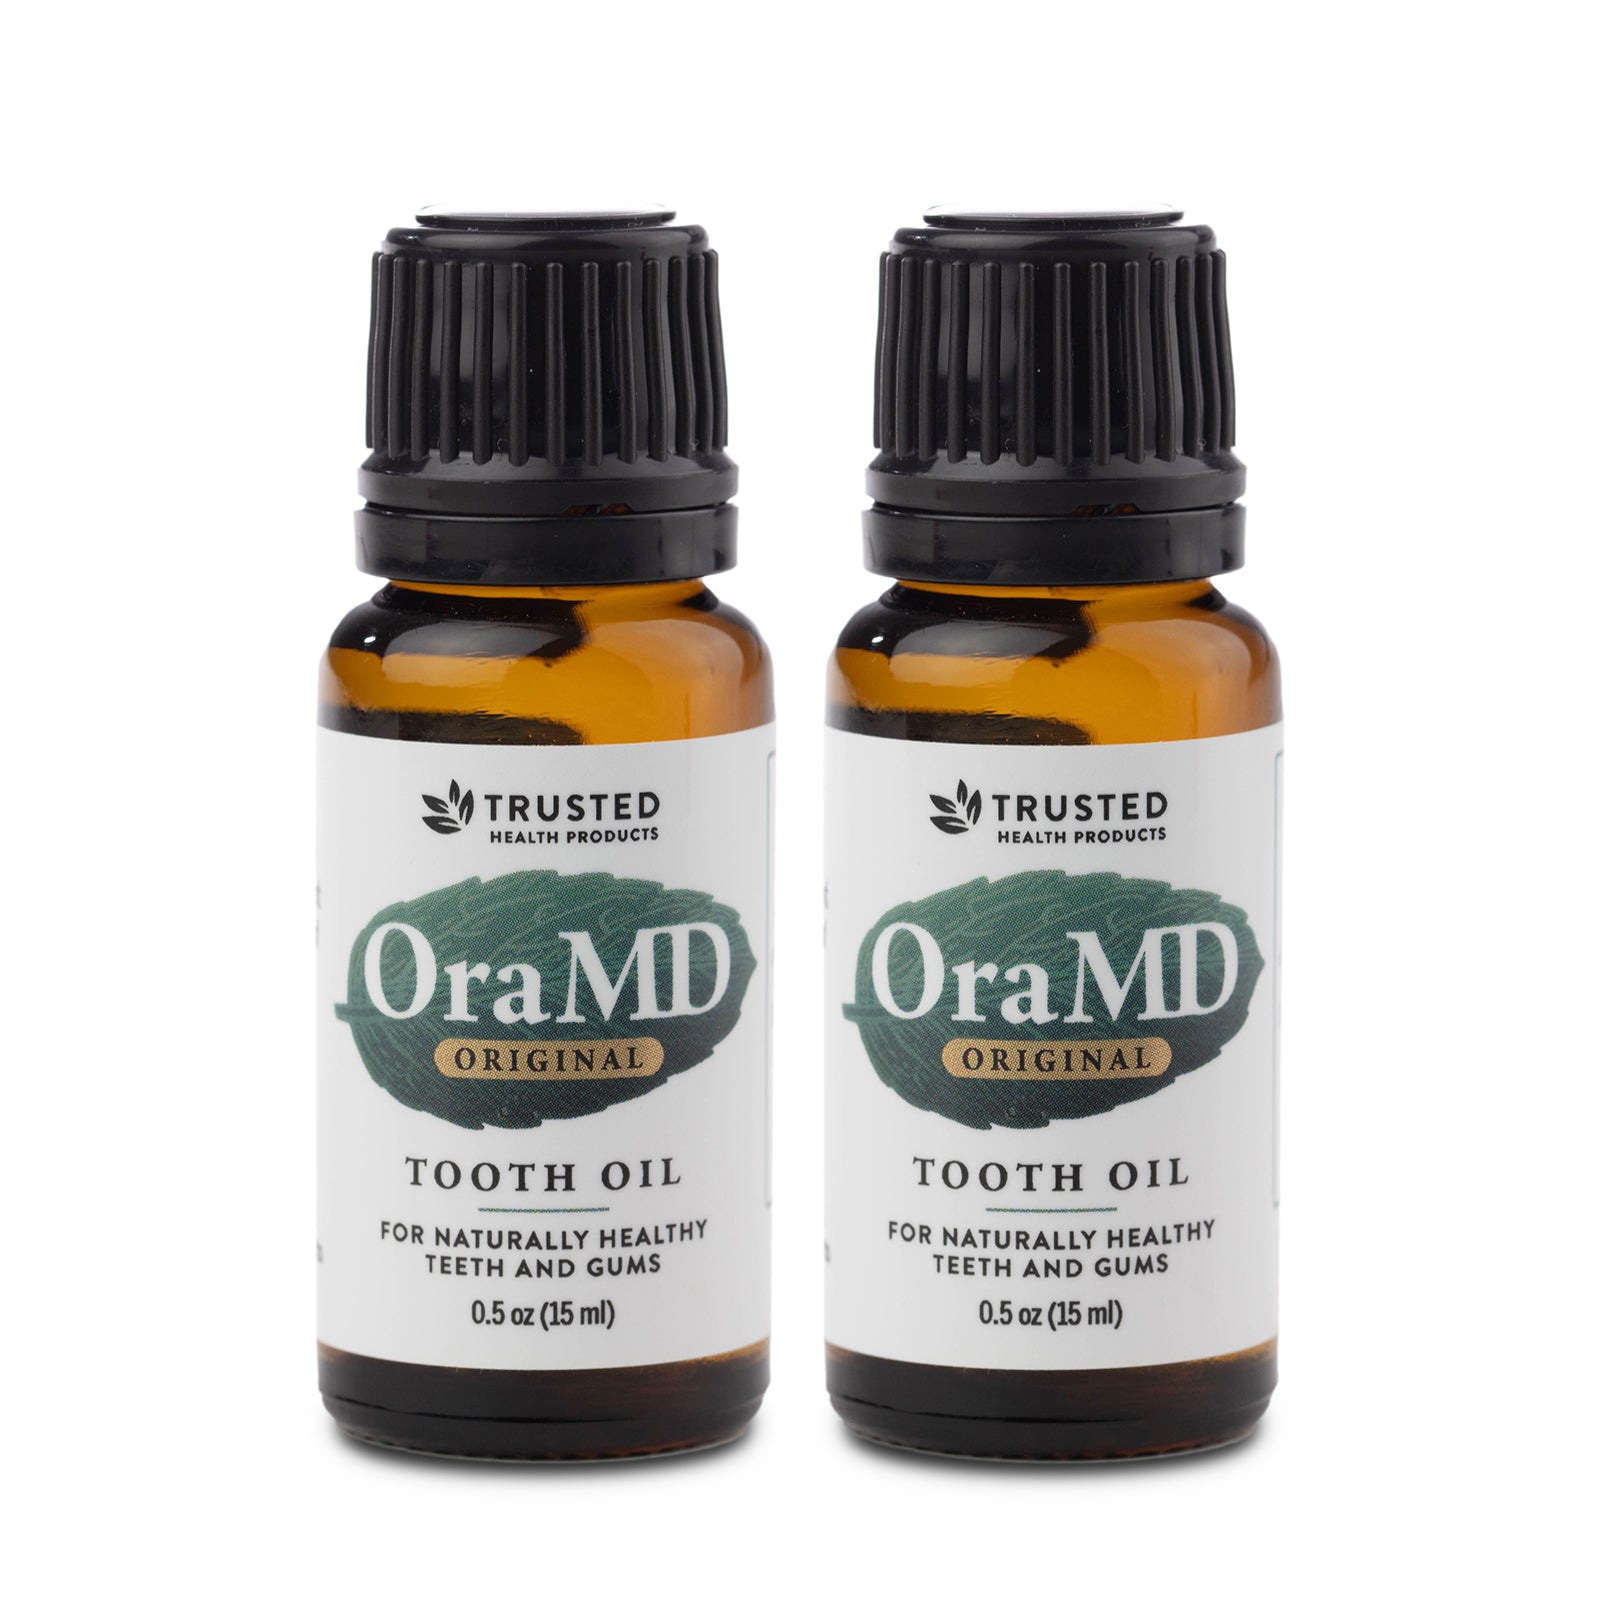 OraMD Original Strength Tooth Oil Bundle Packs